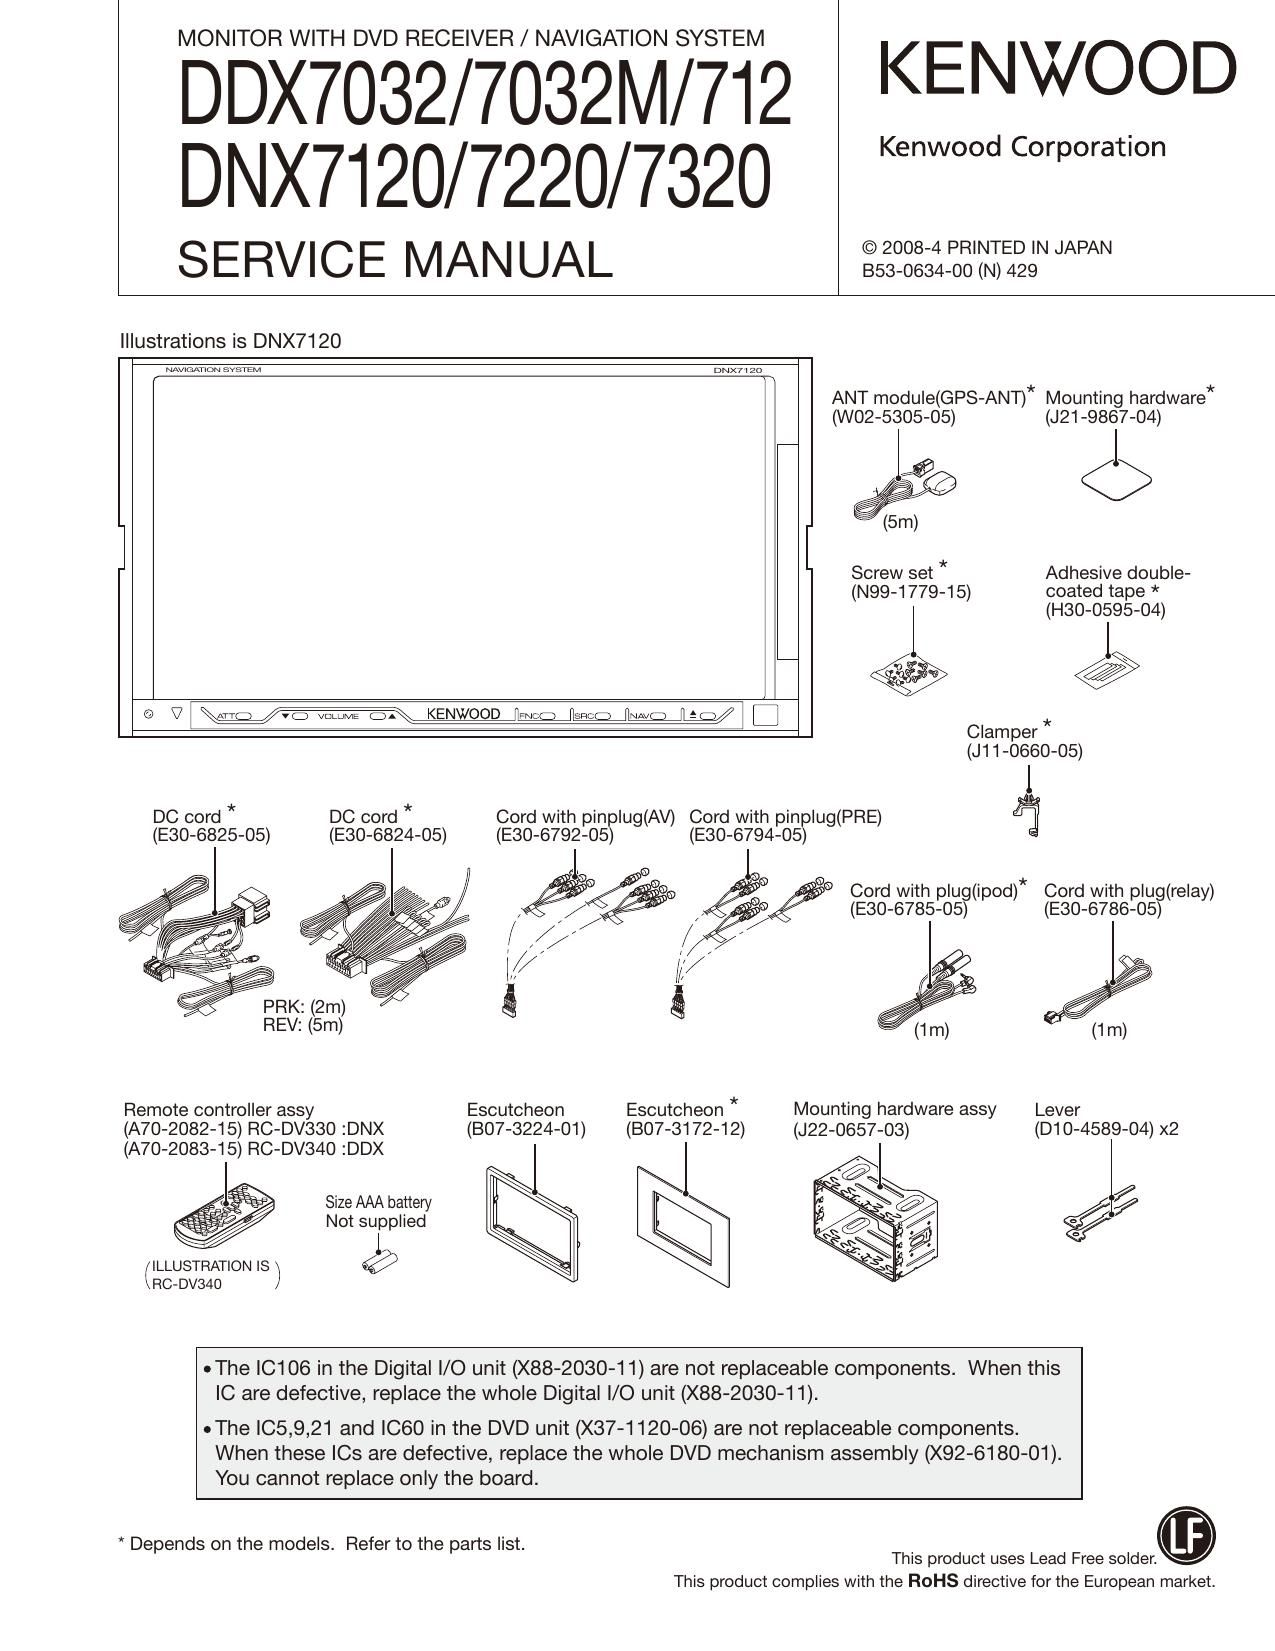 Kenwood DNX 7220 Service Manual